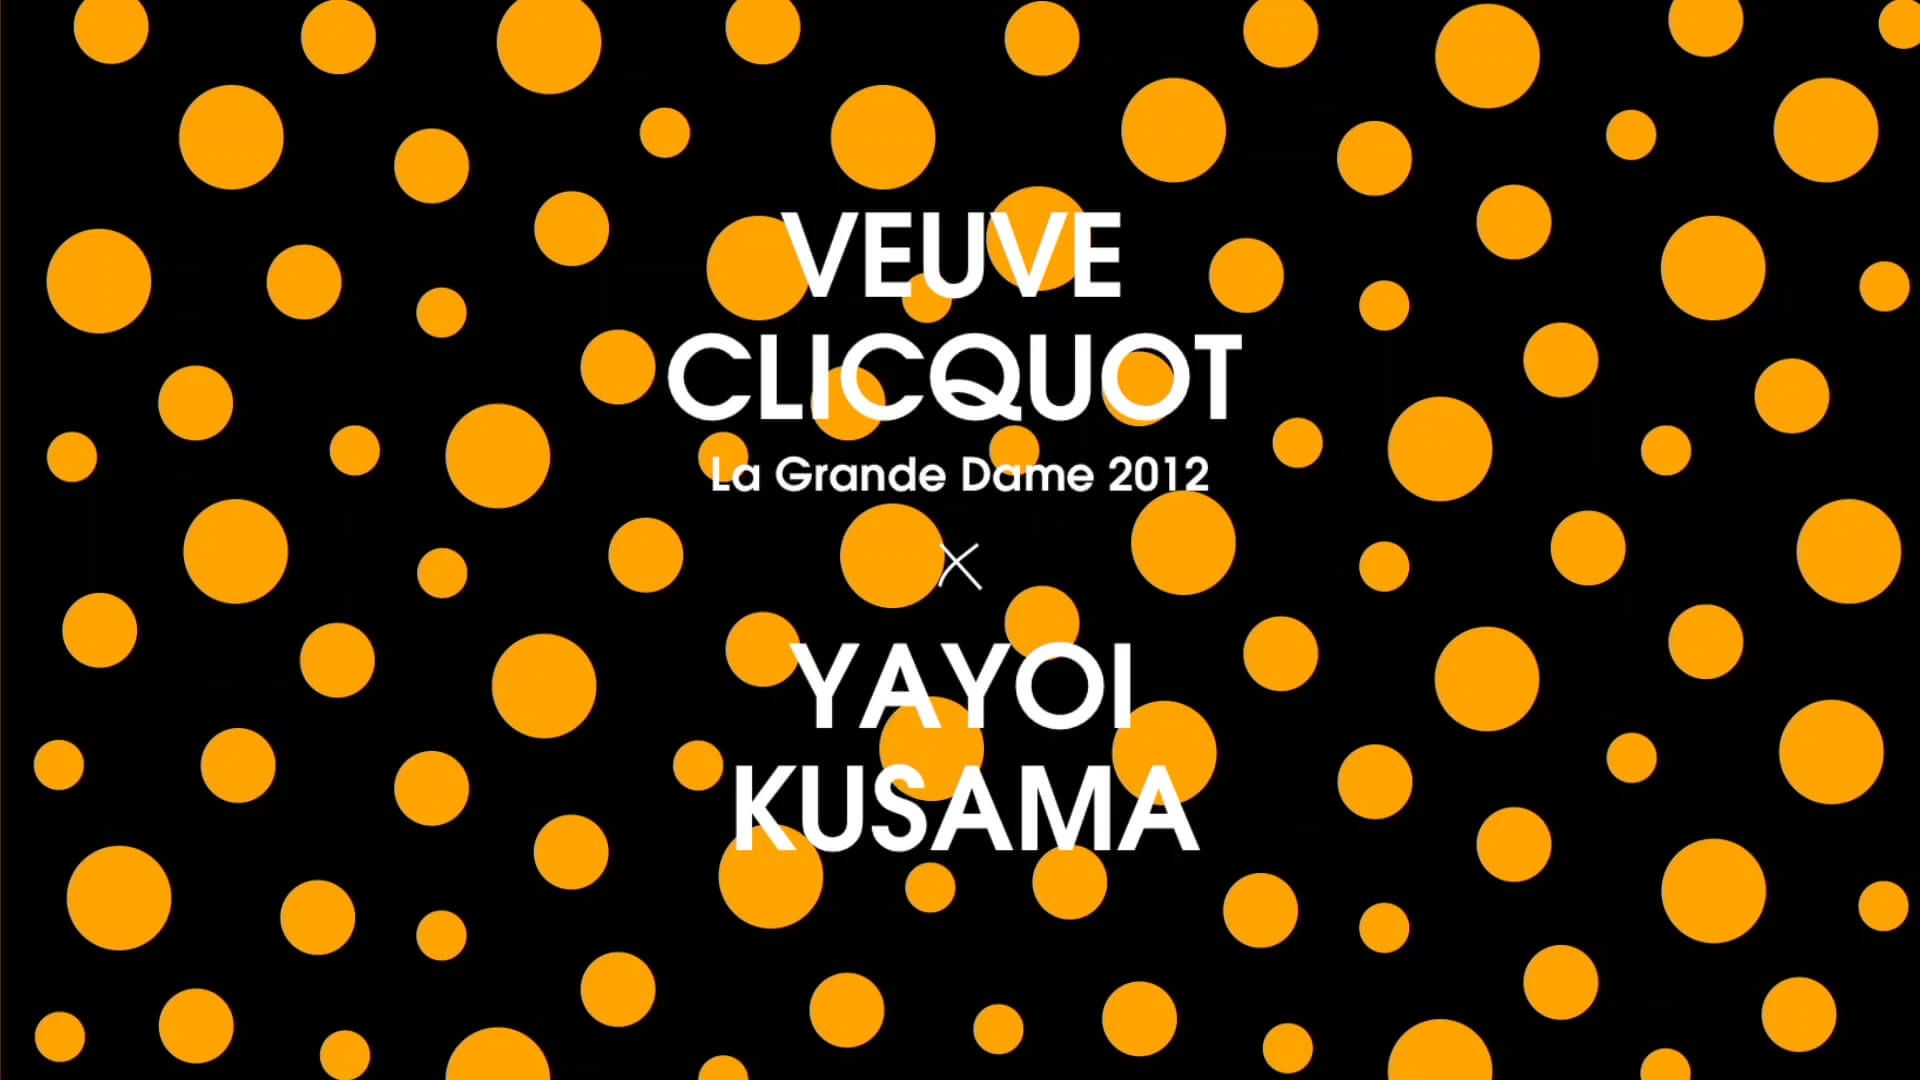 Veuve Clicquot x Yayoi Kusama, La Grande Dame